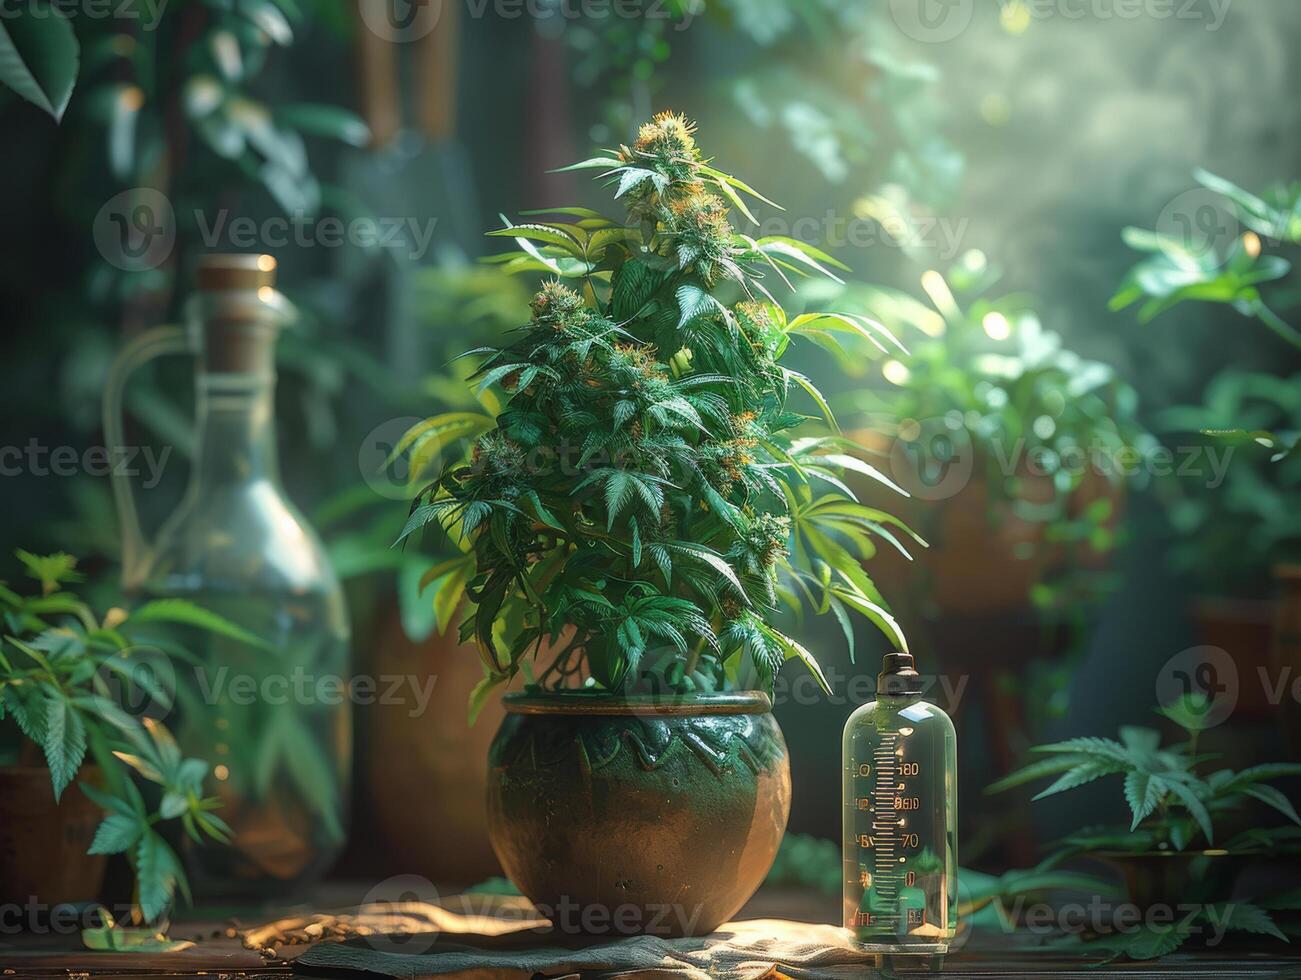 ai gegenereerd binnen- marihuana fabriek in bloempot. medisch marihuana concept foto